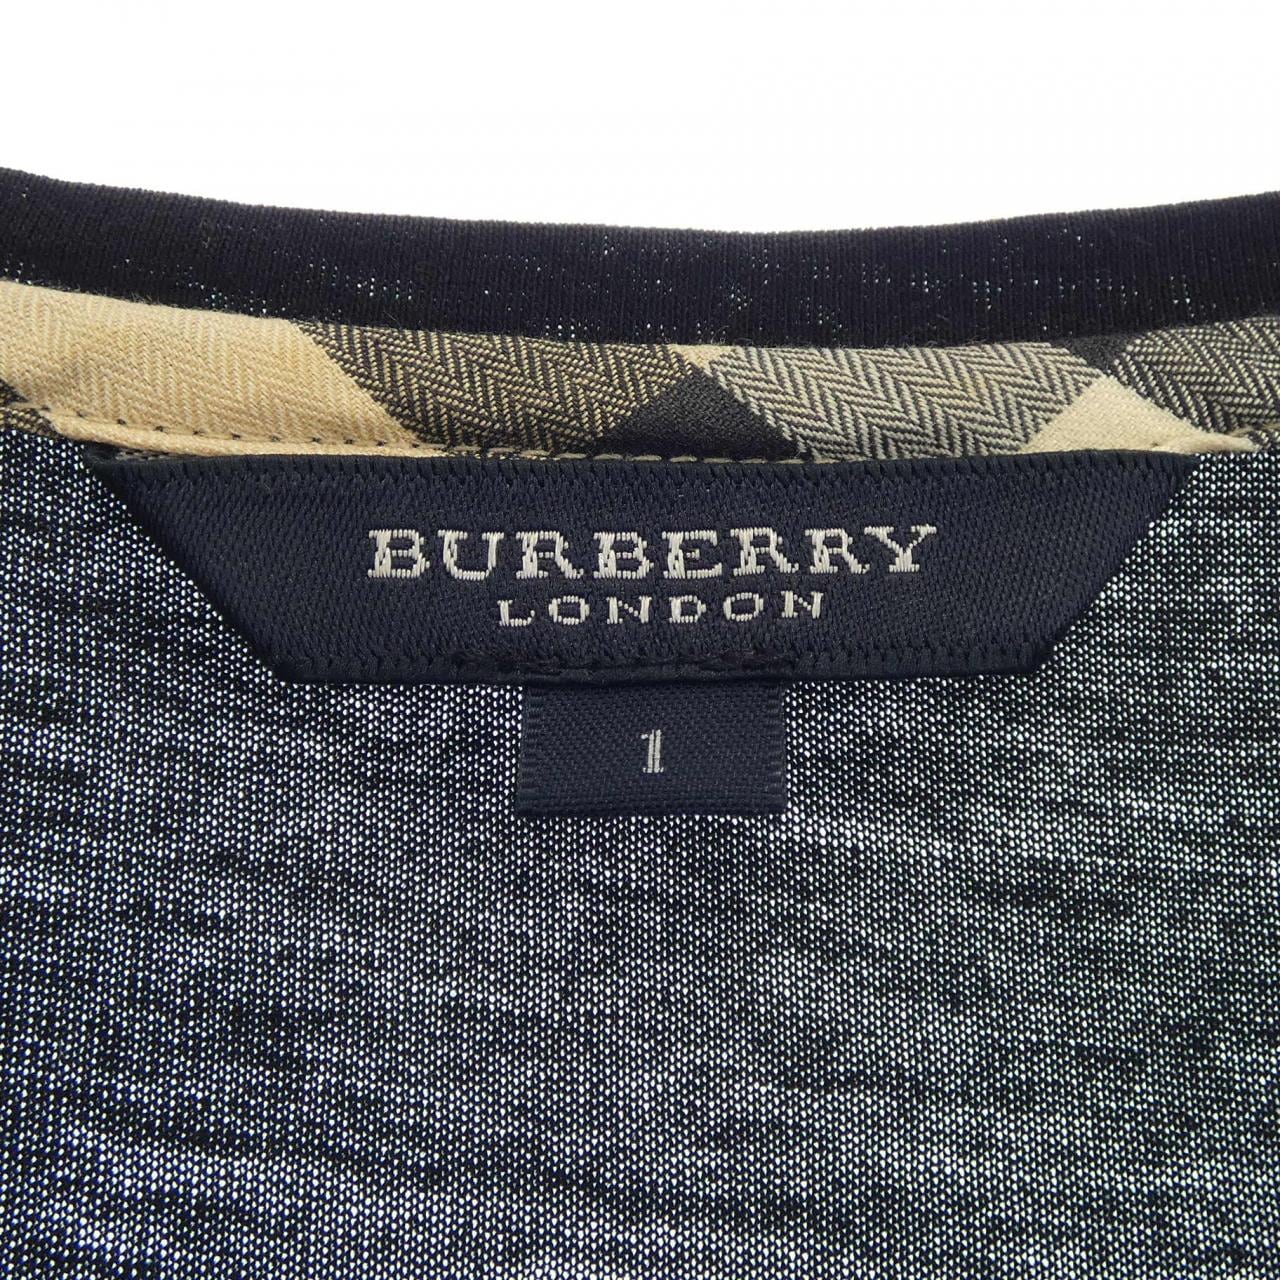 BURBERRY LONDON BURBERRY 伦敦 T 恤